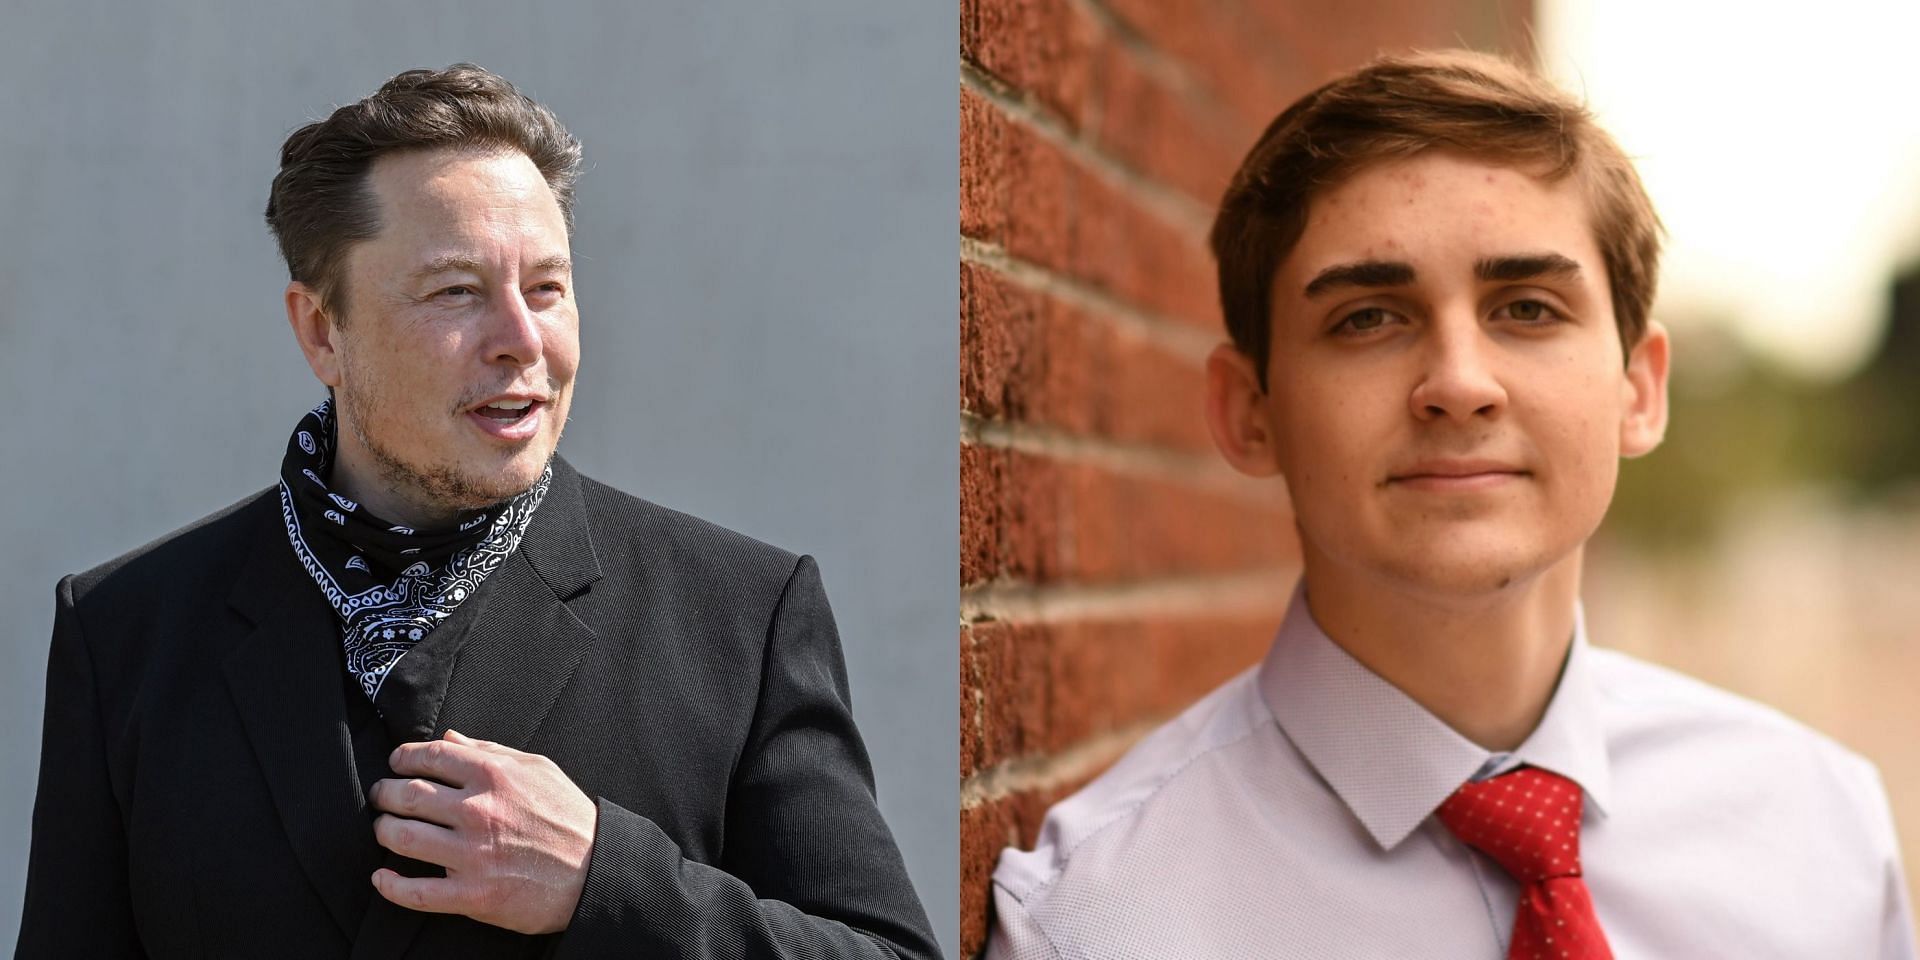 Elon Musk and Jack Sweeney (Image via Patrick Pleul/Getty Images, and Jack-Sweeney/LinkedIn)